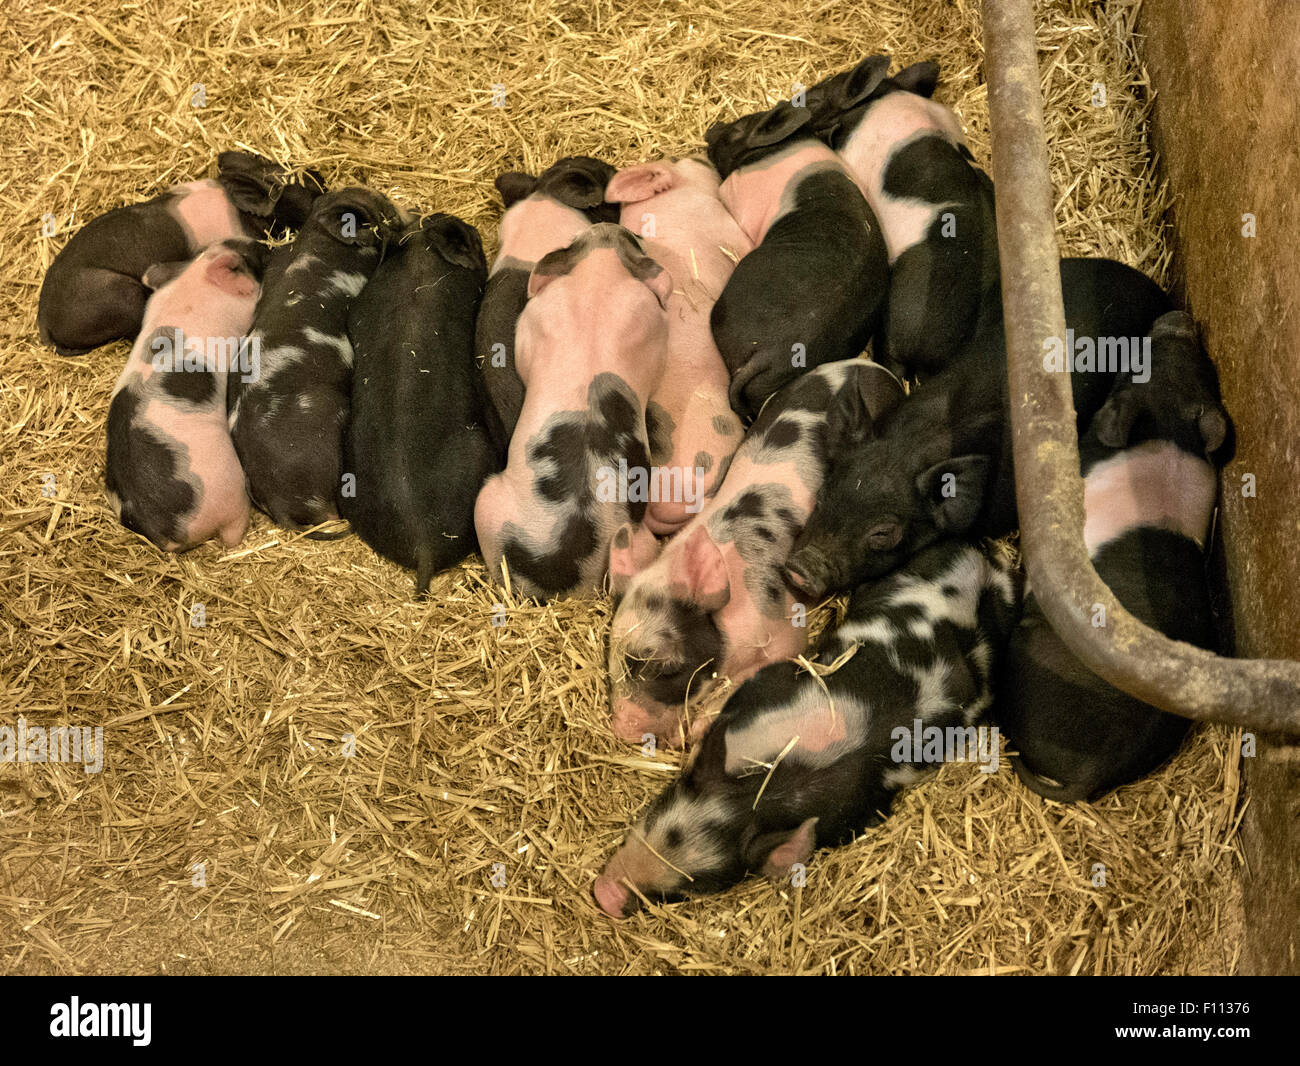 Berkshire Yorkshire X, 2 week old piglets sleeping. Stock Photo